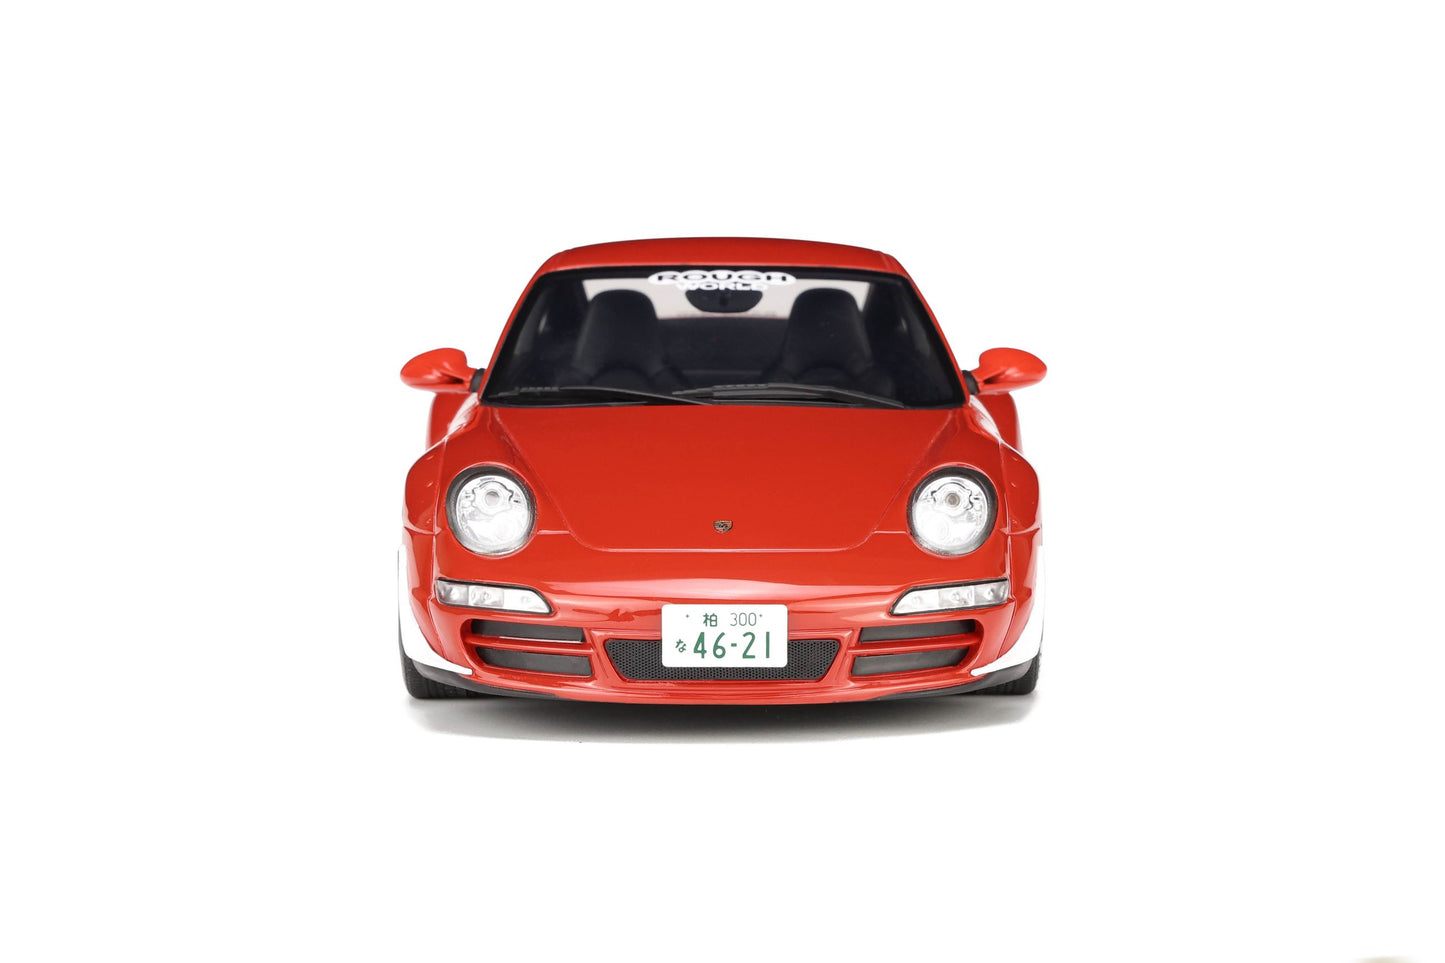 GT Spirit - RWB Porsche 911 (997) "Phila" (Red) 1:18 Scale Model Car